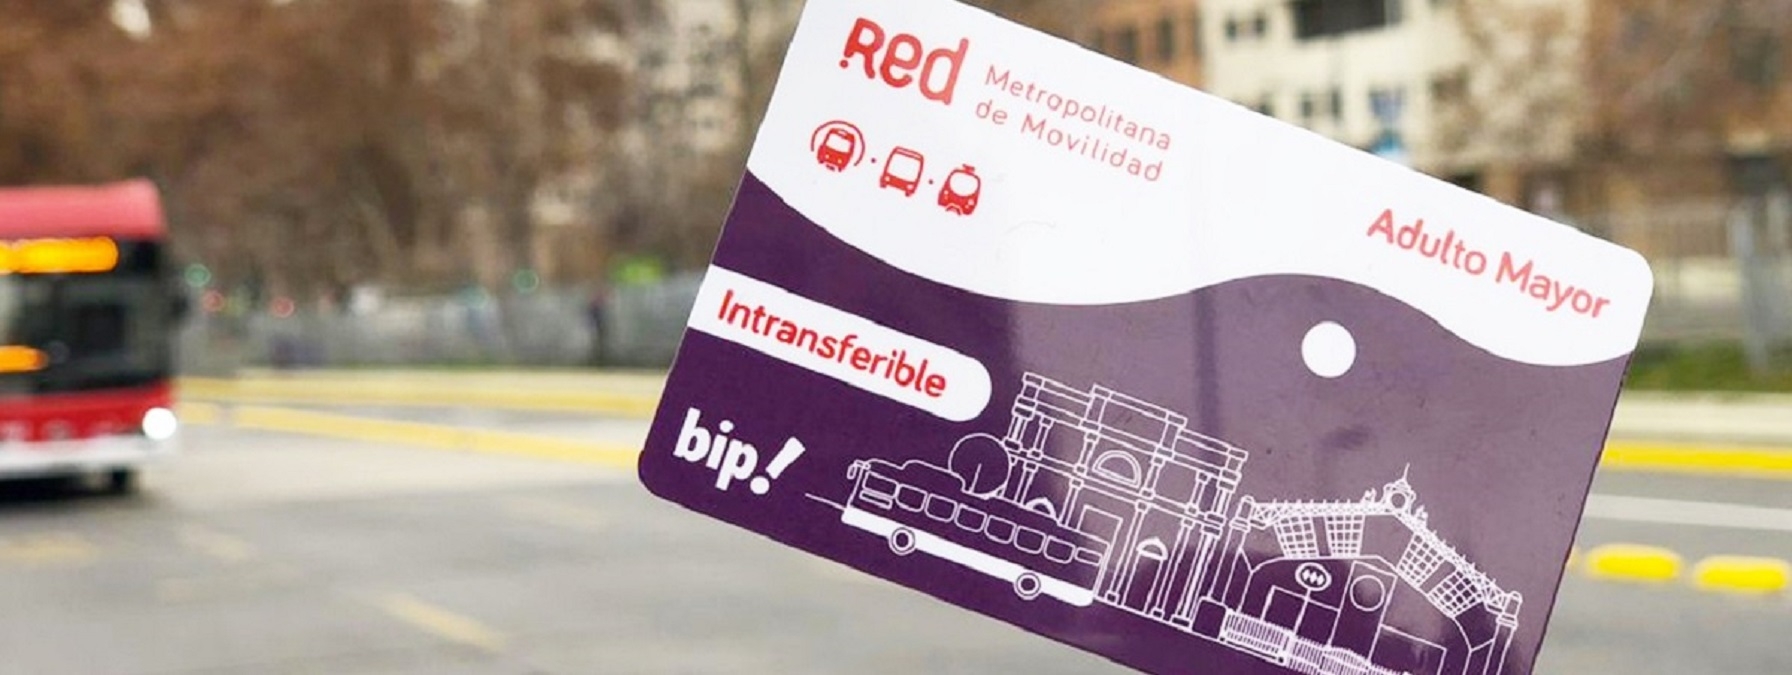 Tarjeta Bip Adulto Mayor Intermodal (Red de Movilidad)